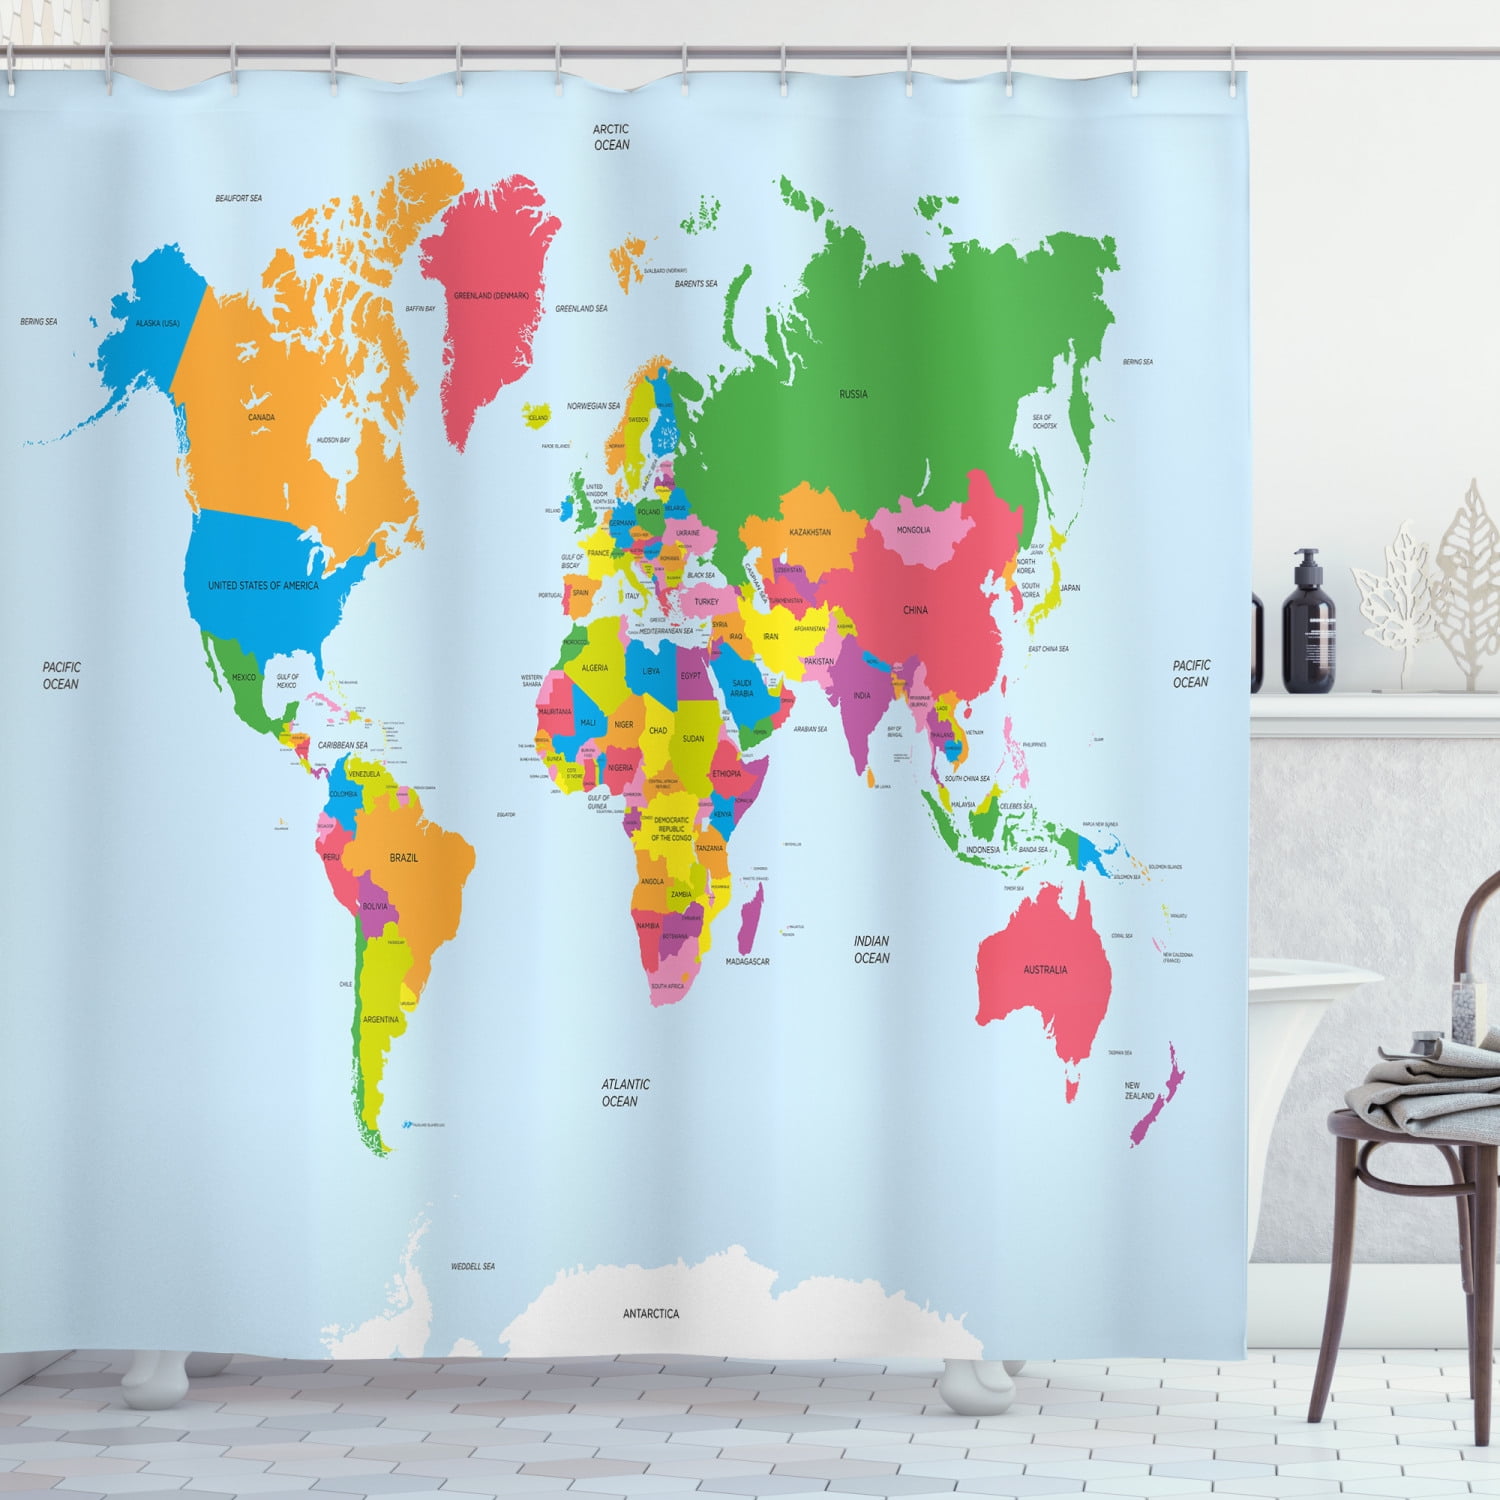 World Map Pattern Shower Curtain Bathroom Waterproof Fabric 12 Hooks 71 Inch Hot 